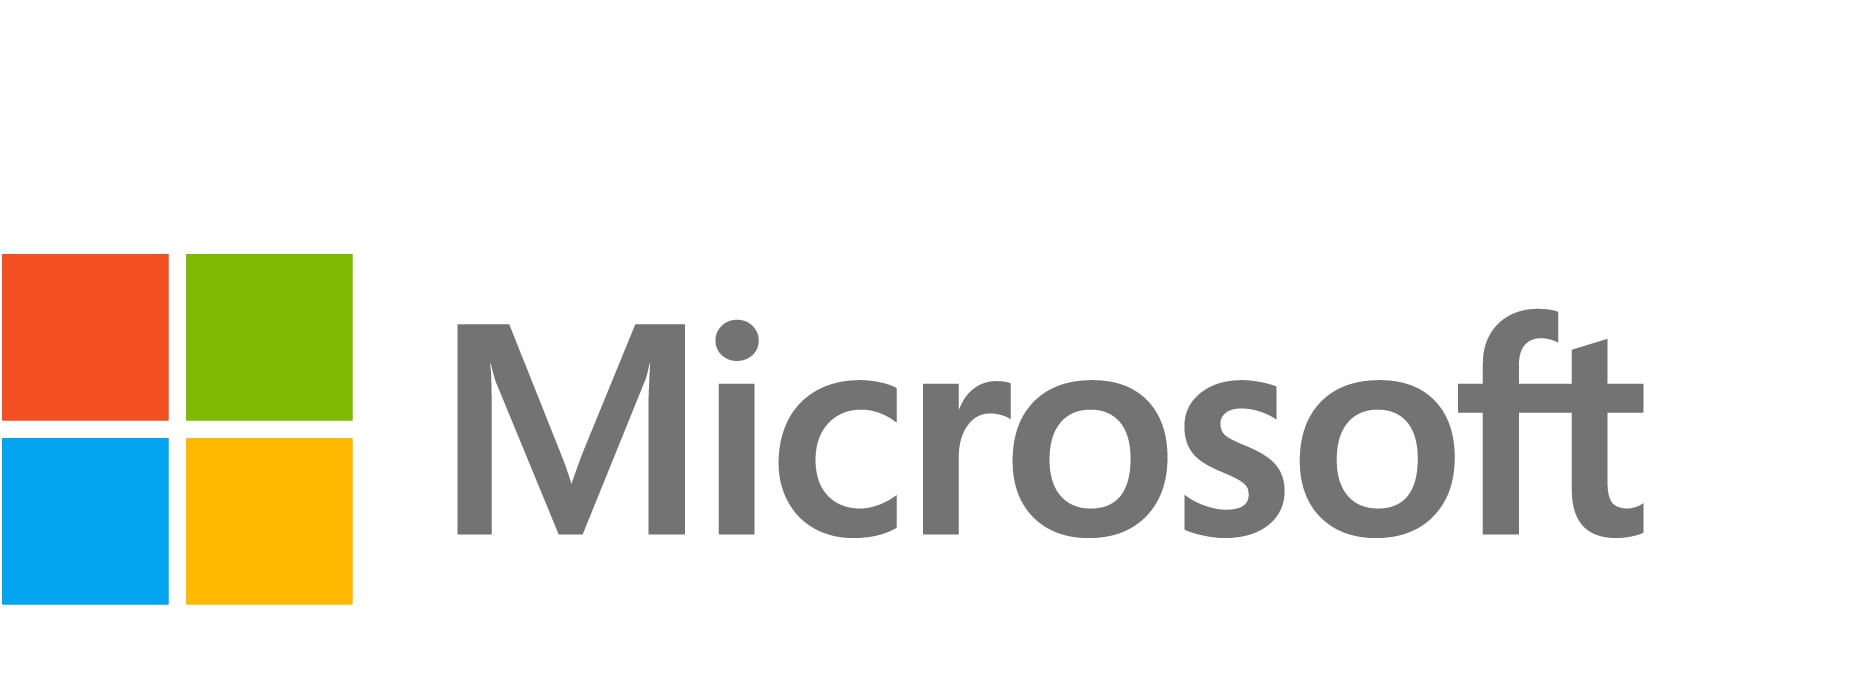 Microsoft Virtual Desktop Infrastructure - subscription license (1 month) - 1 device